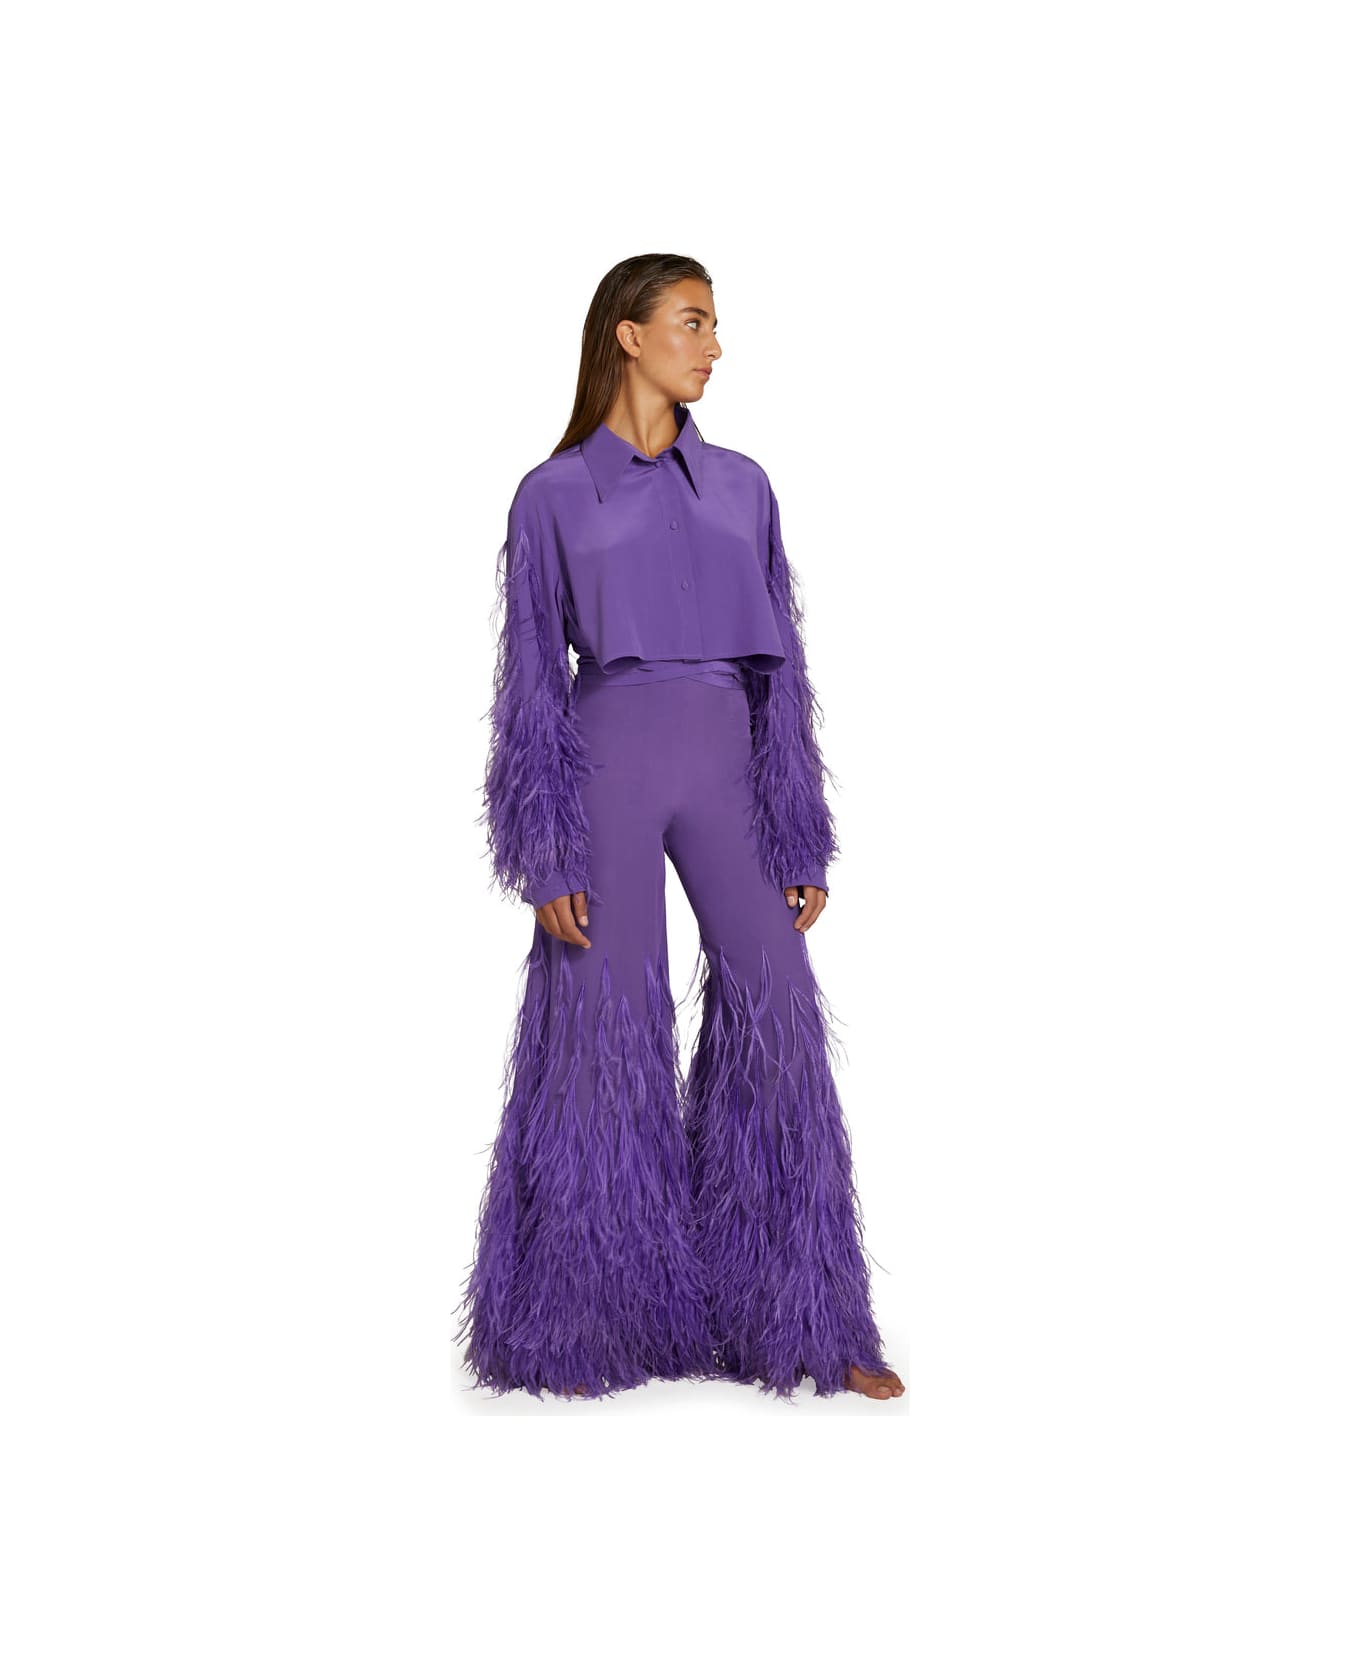 Amotea Marta In Purple Silk & Plumes - Purple